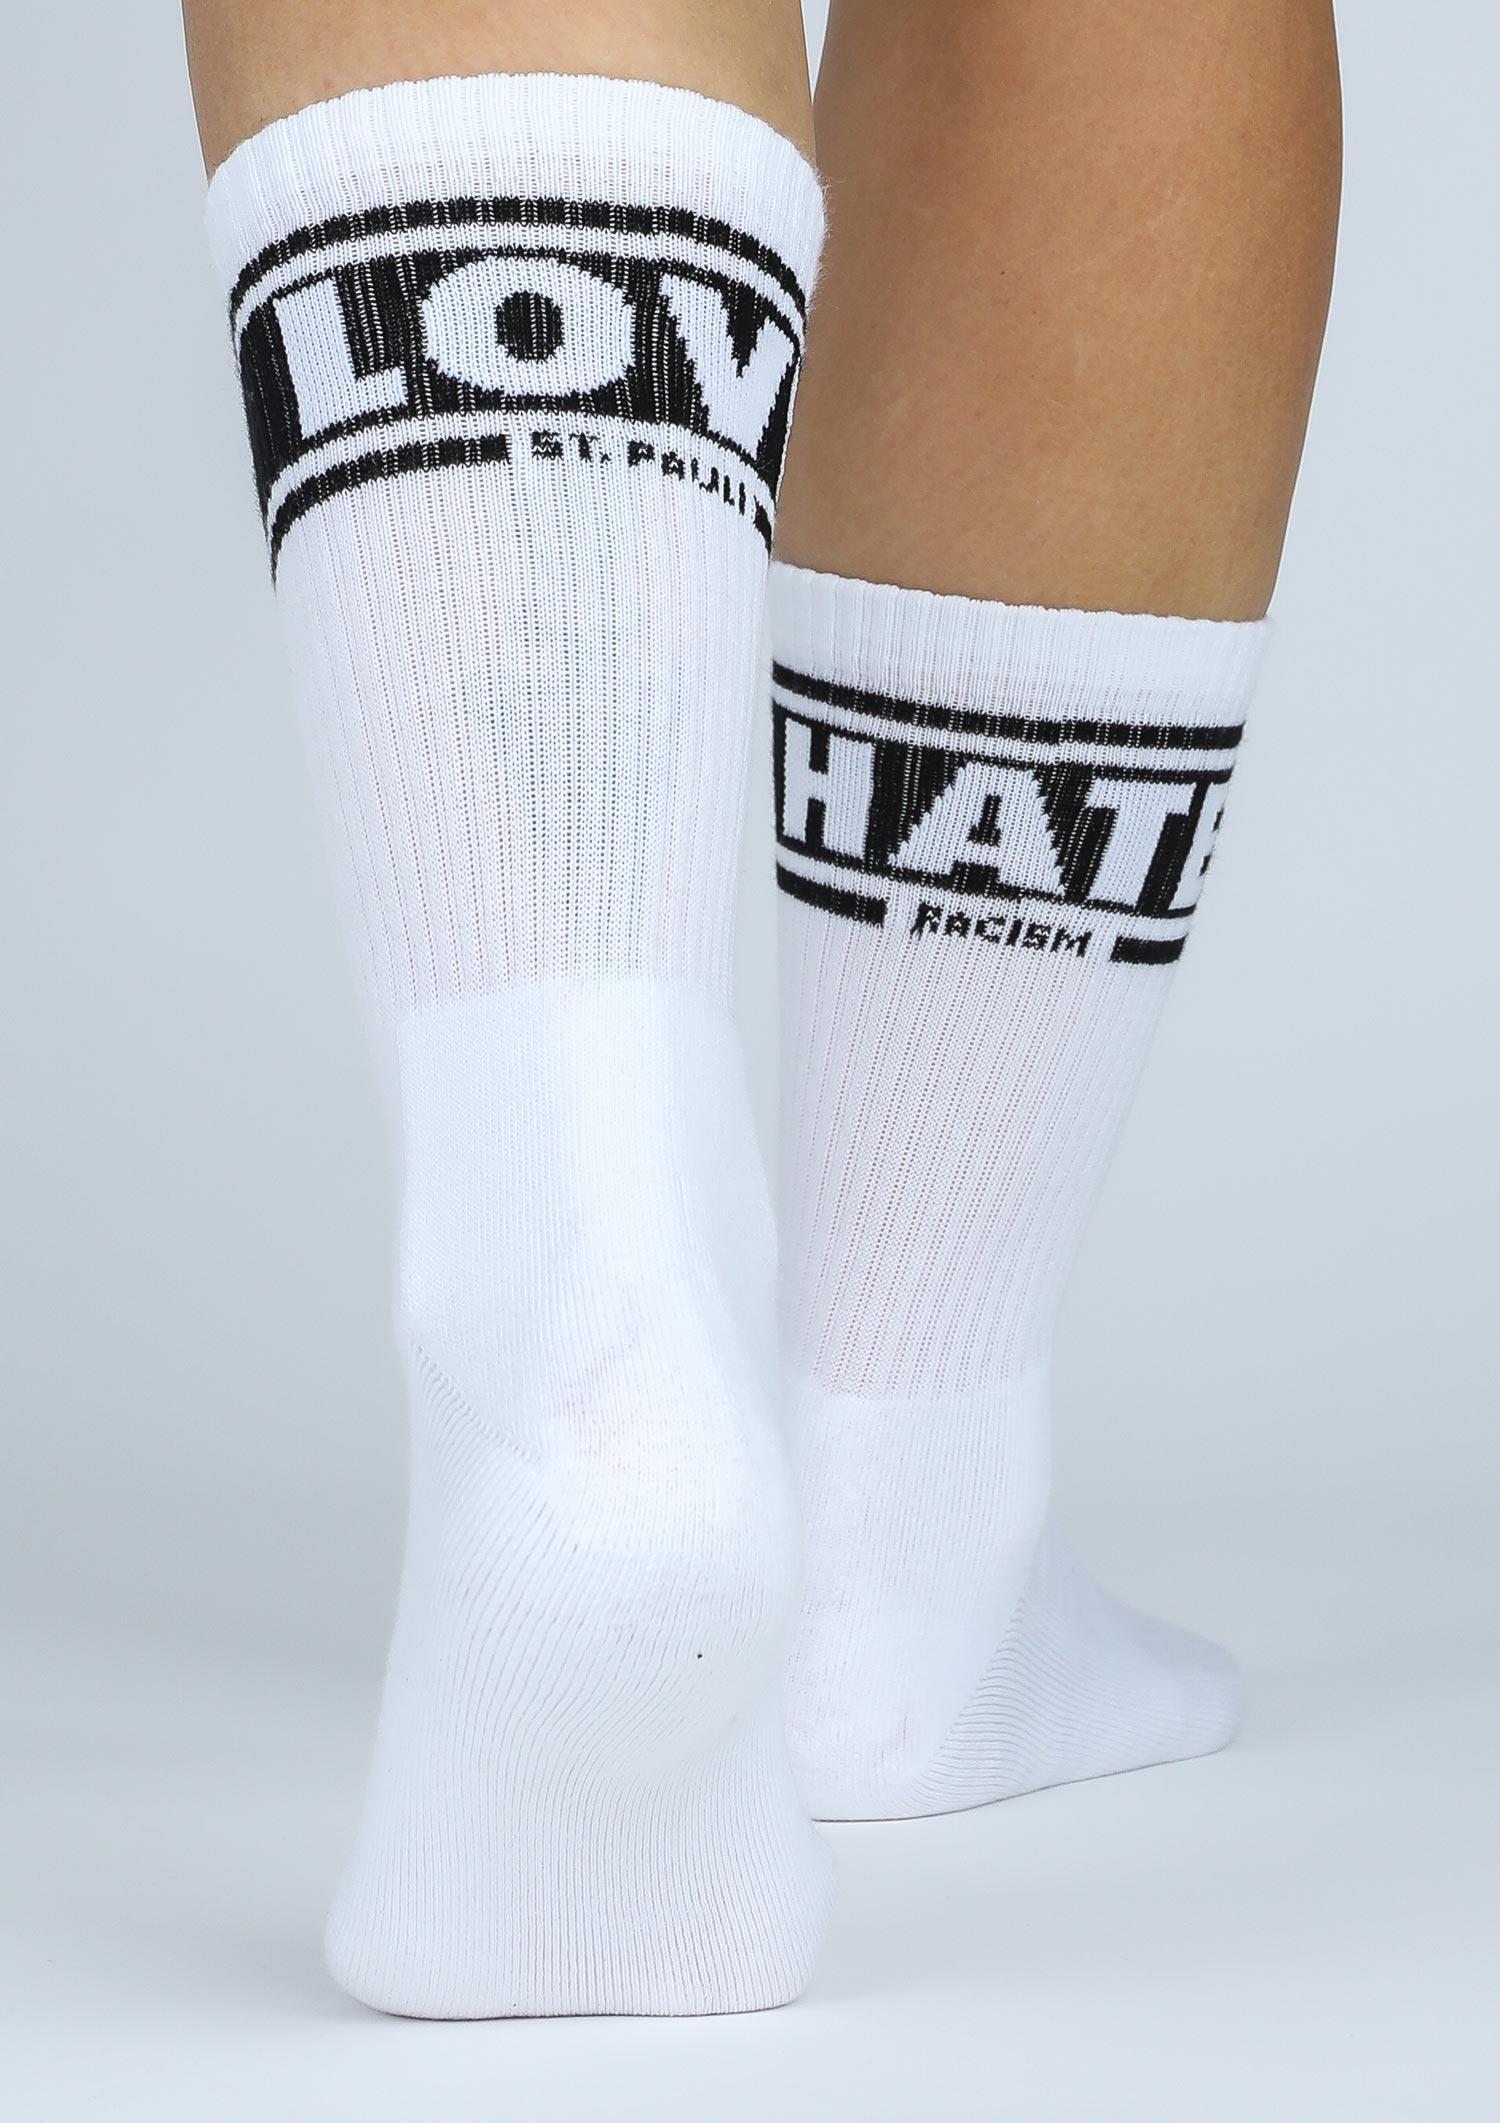 Tennis socks "Love Hate" white